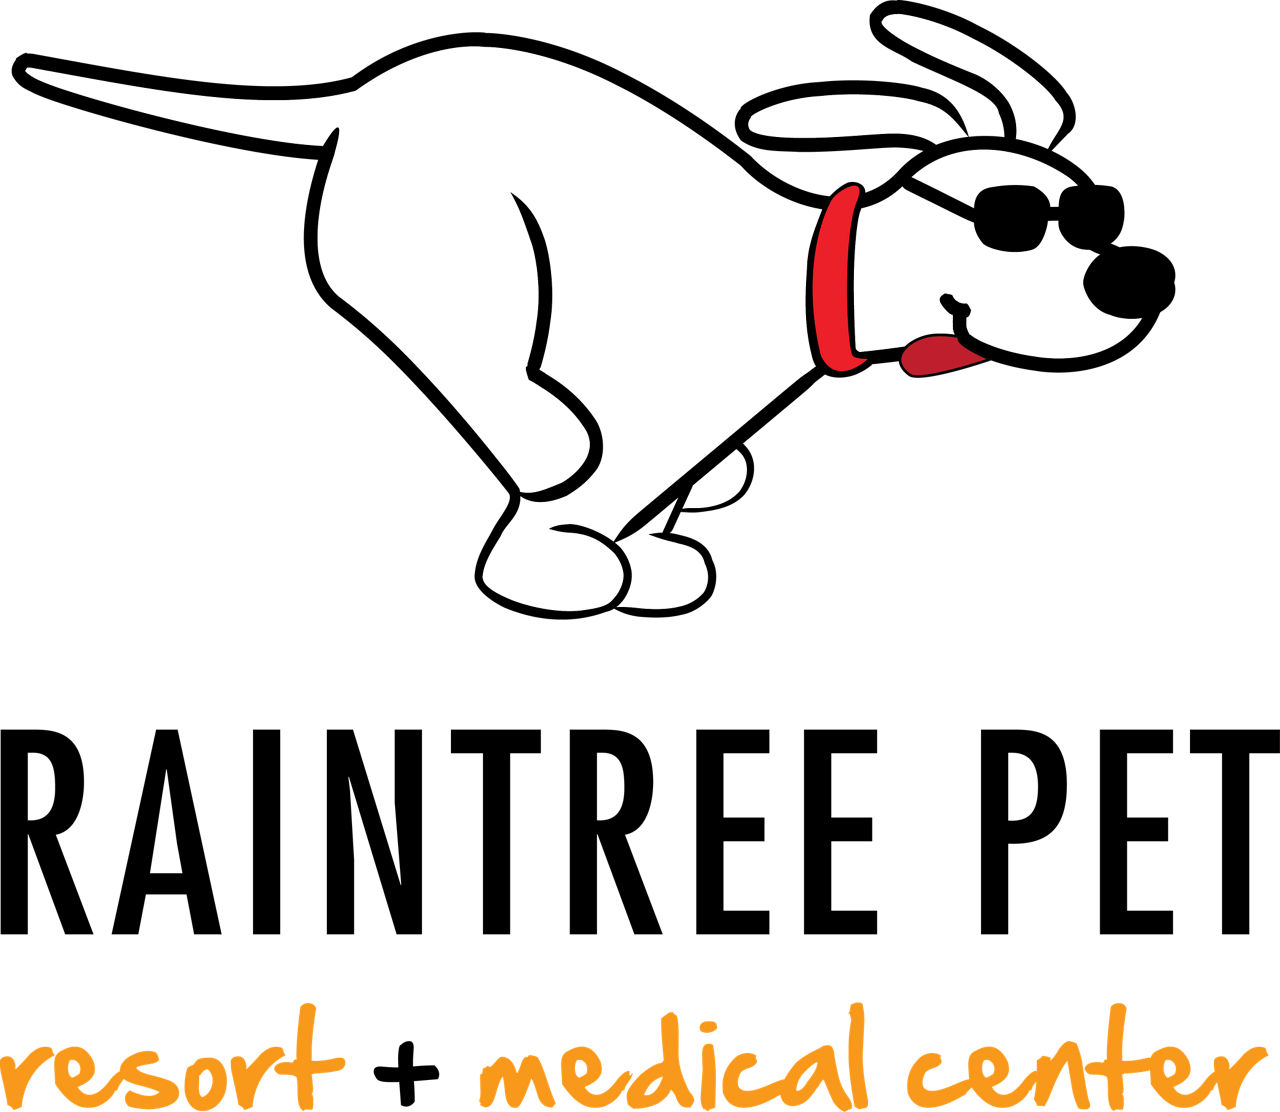 Raintree Pet Resort + Medical Center Logo